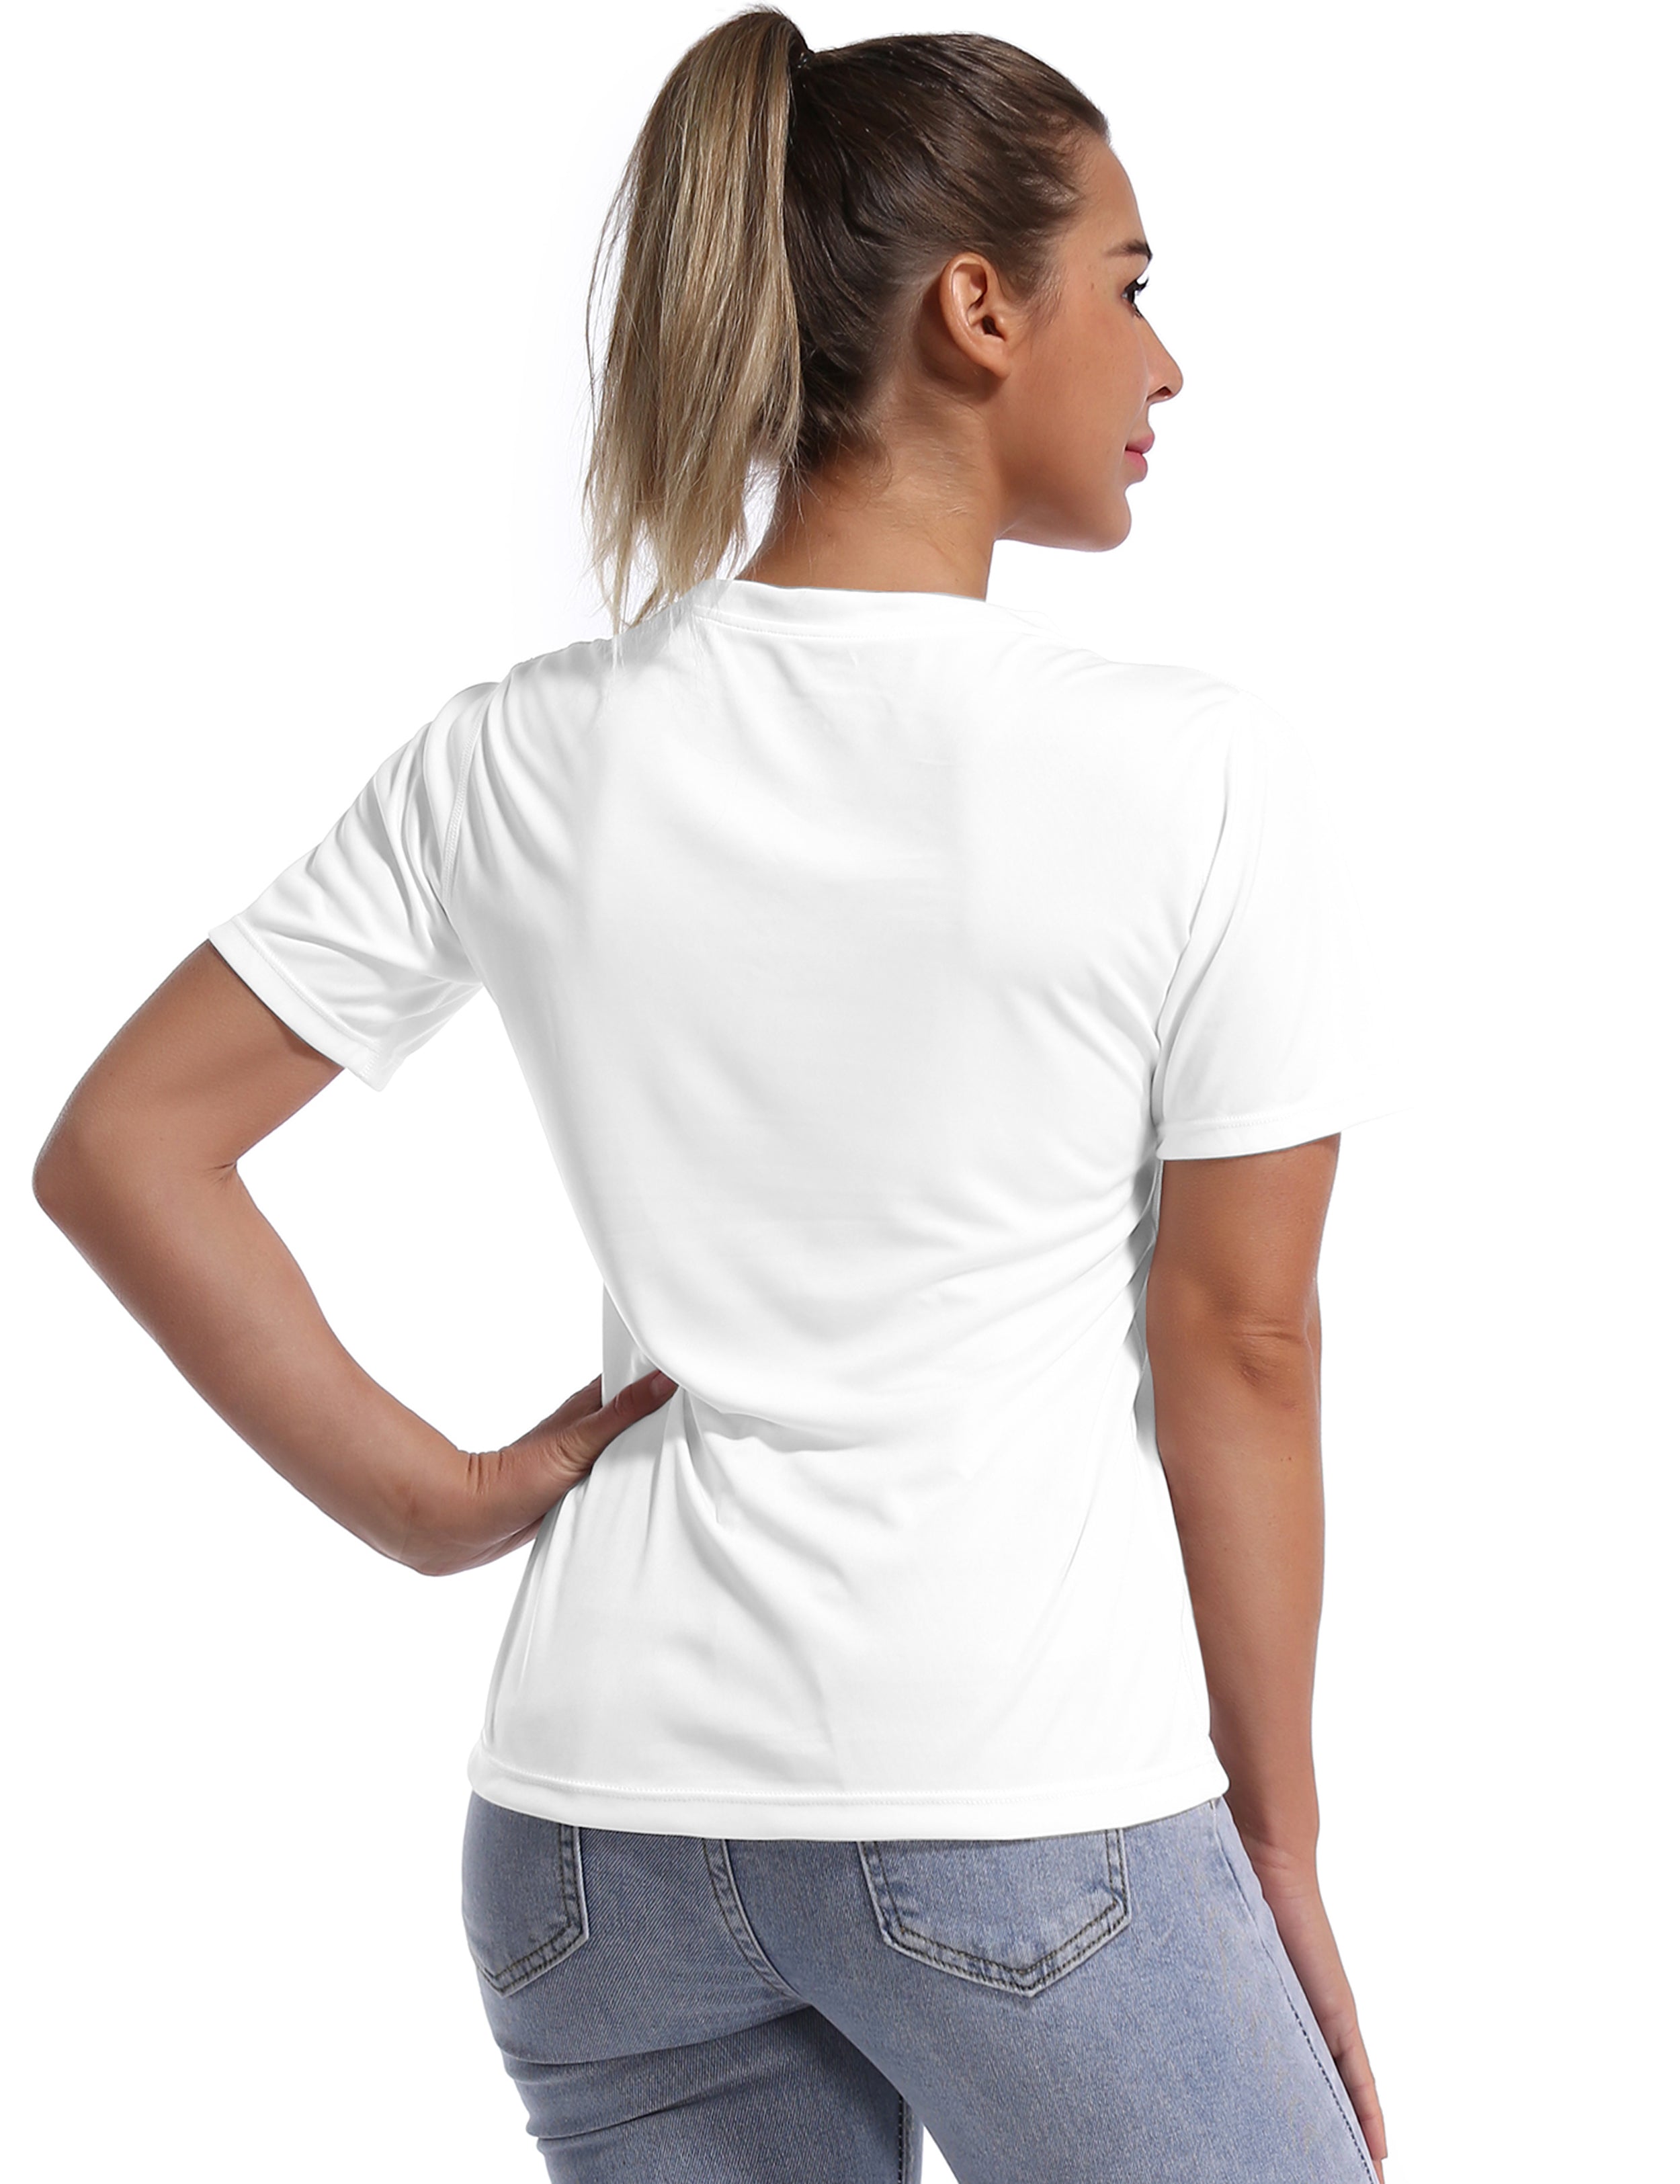 V-Neck Short Sleeve Athletic Shirts white